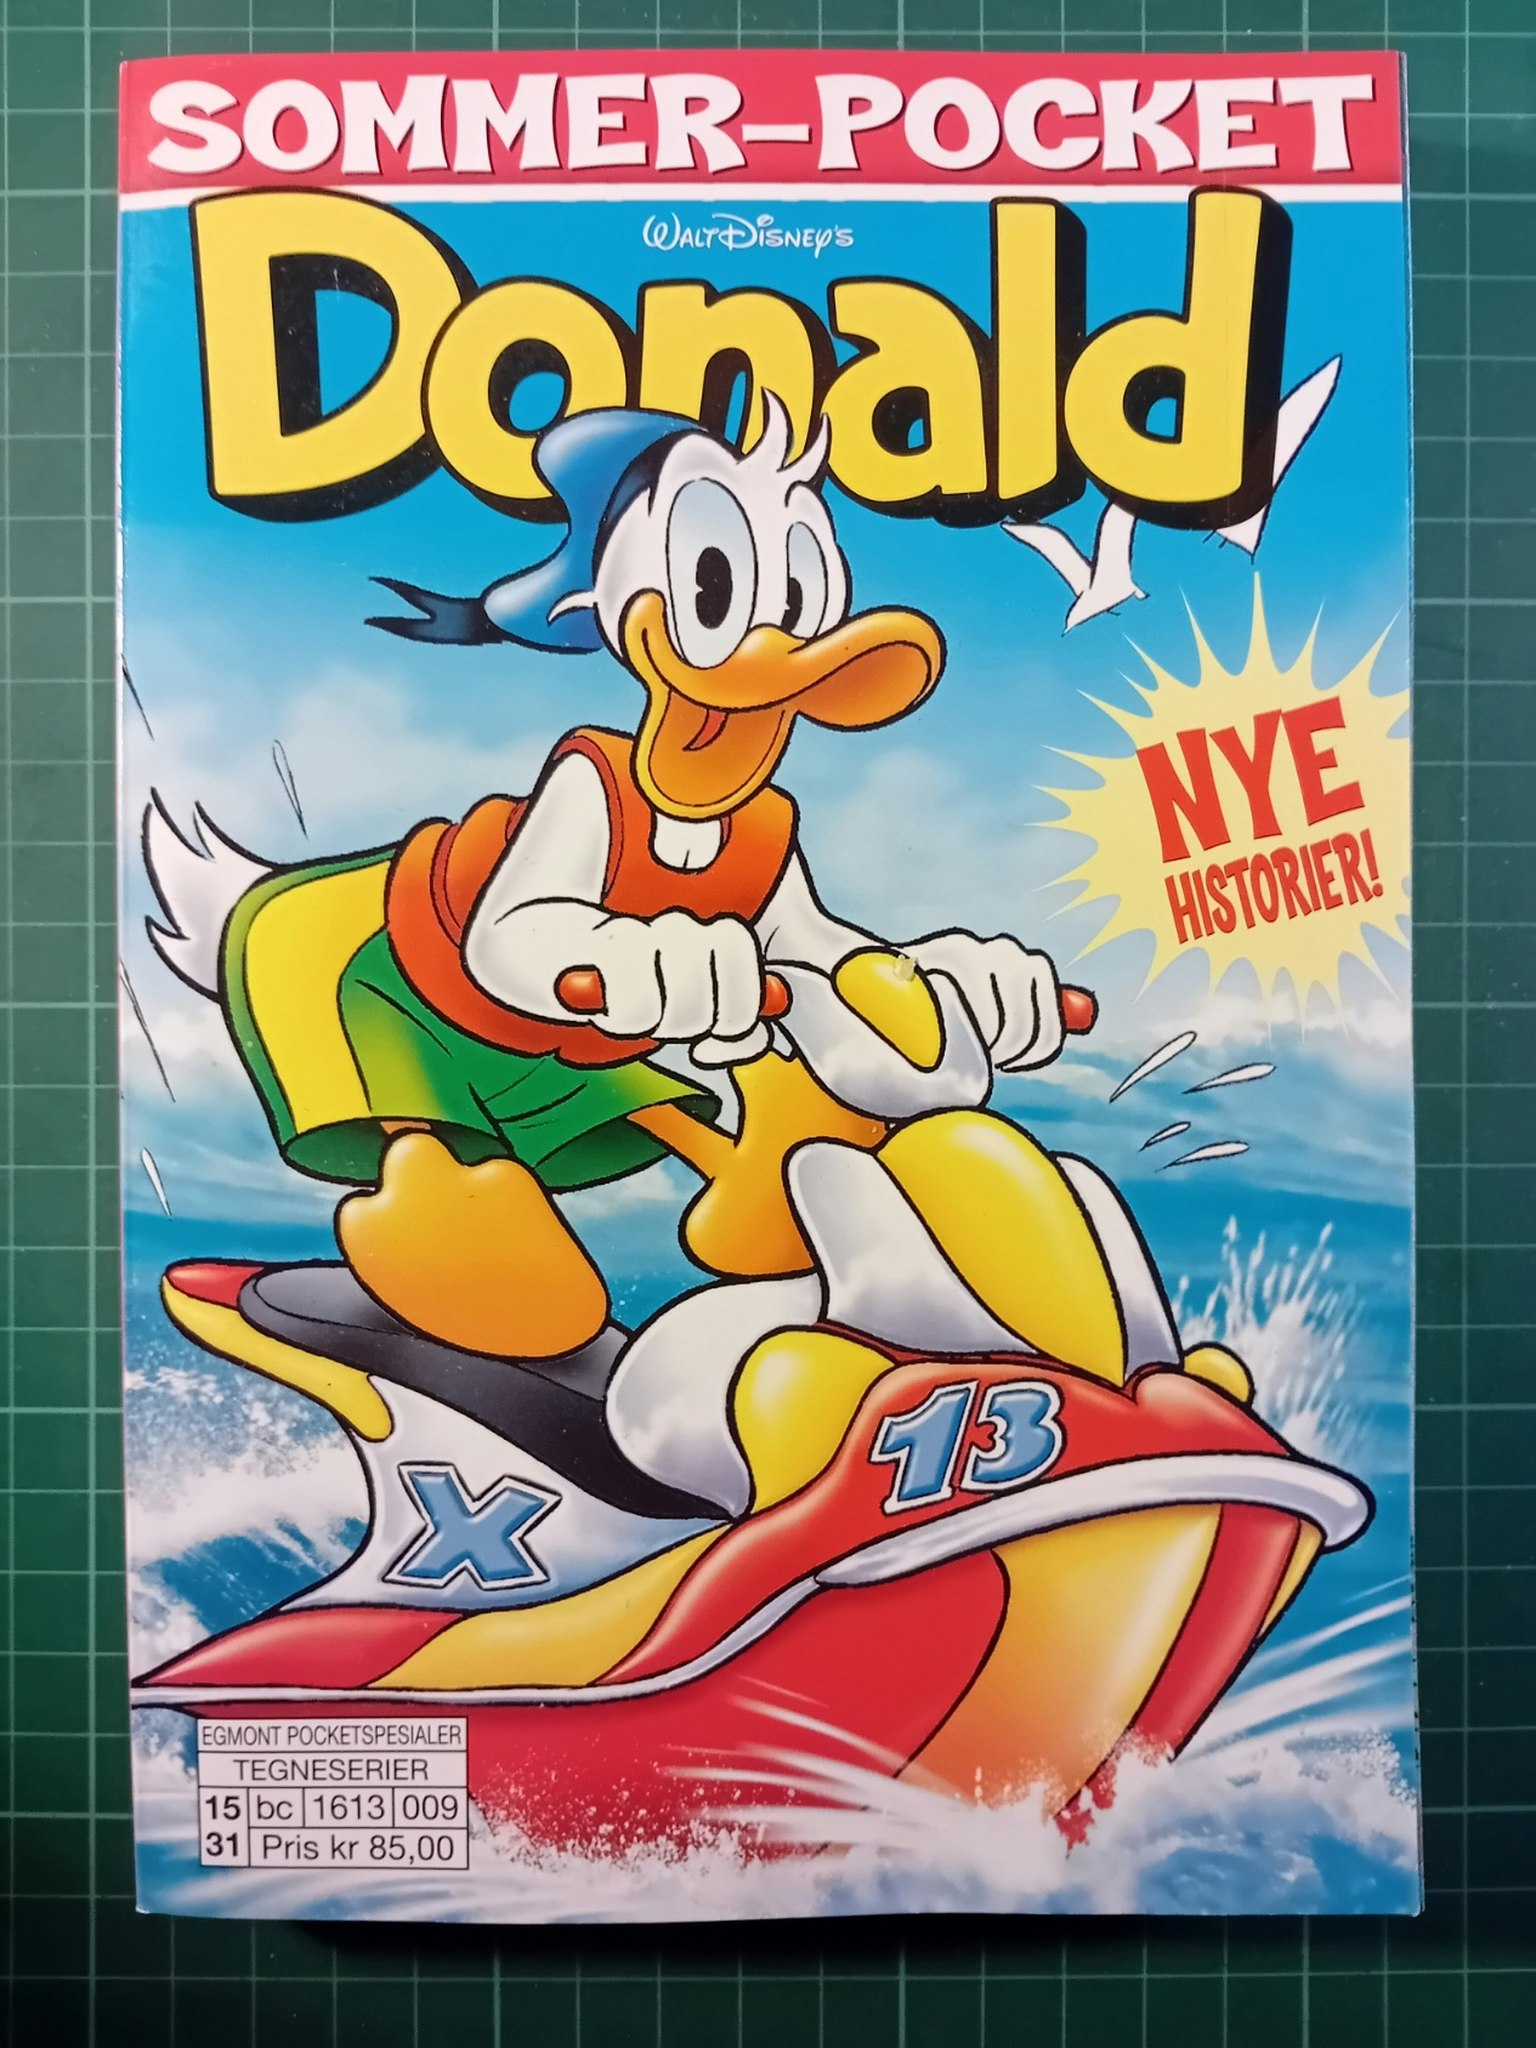 Sommerpocket Donald 2015